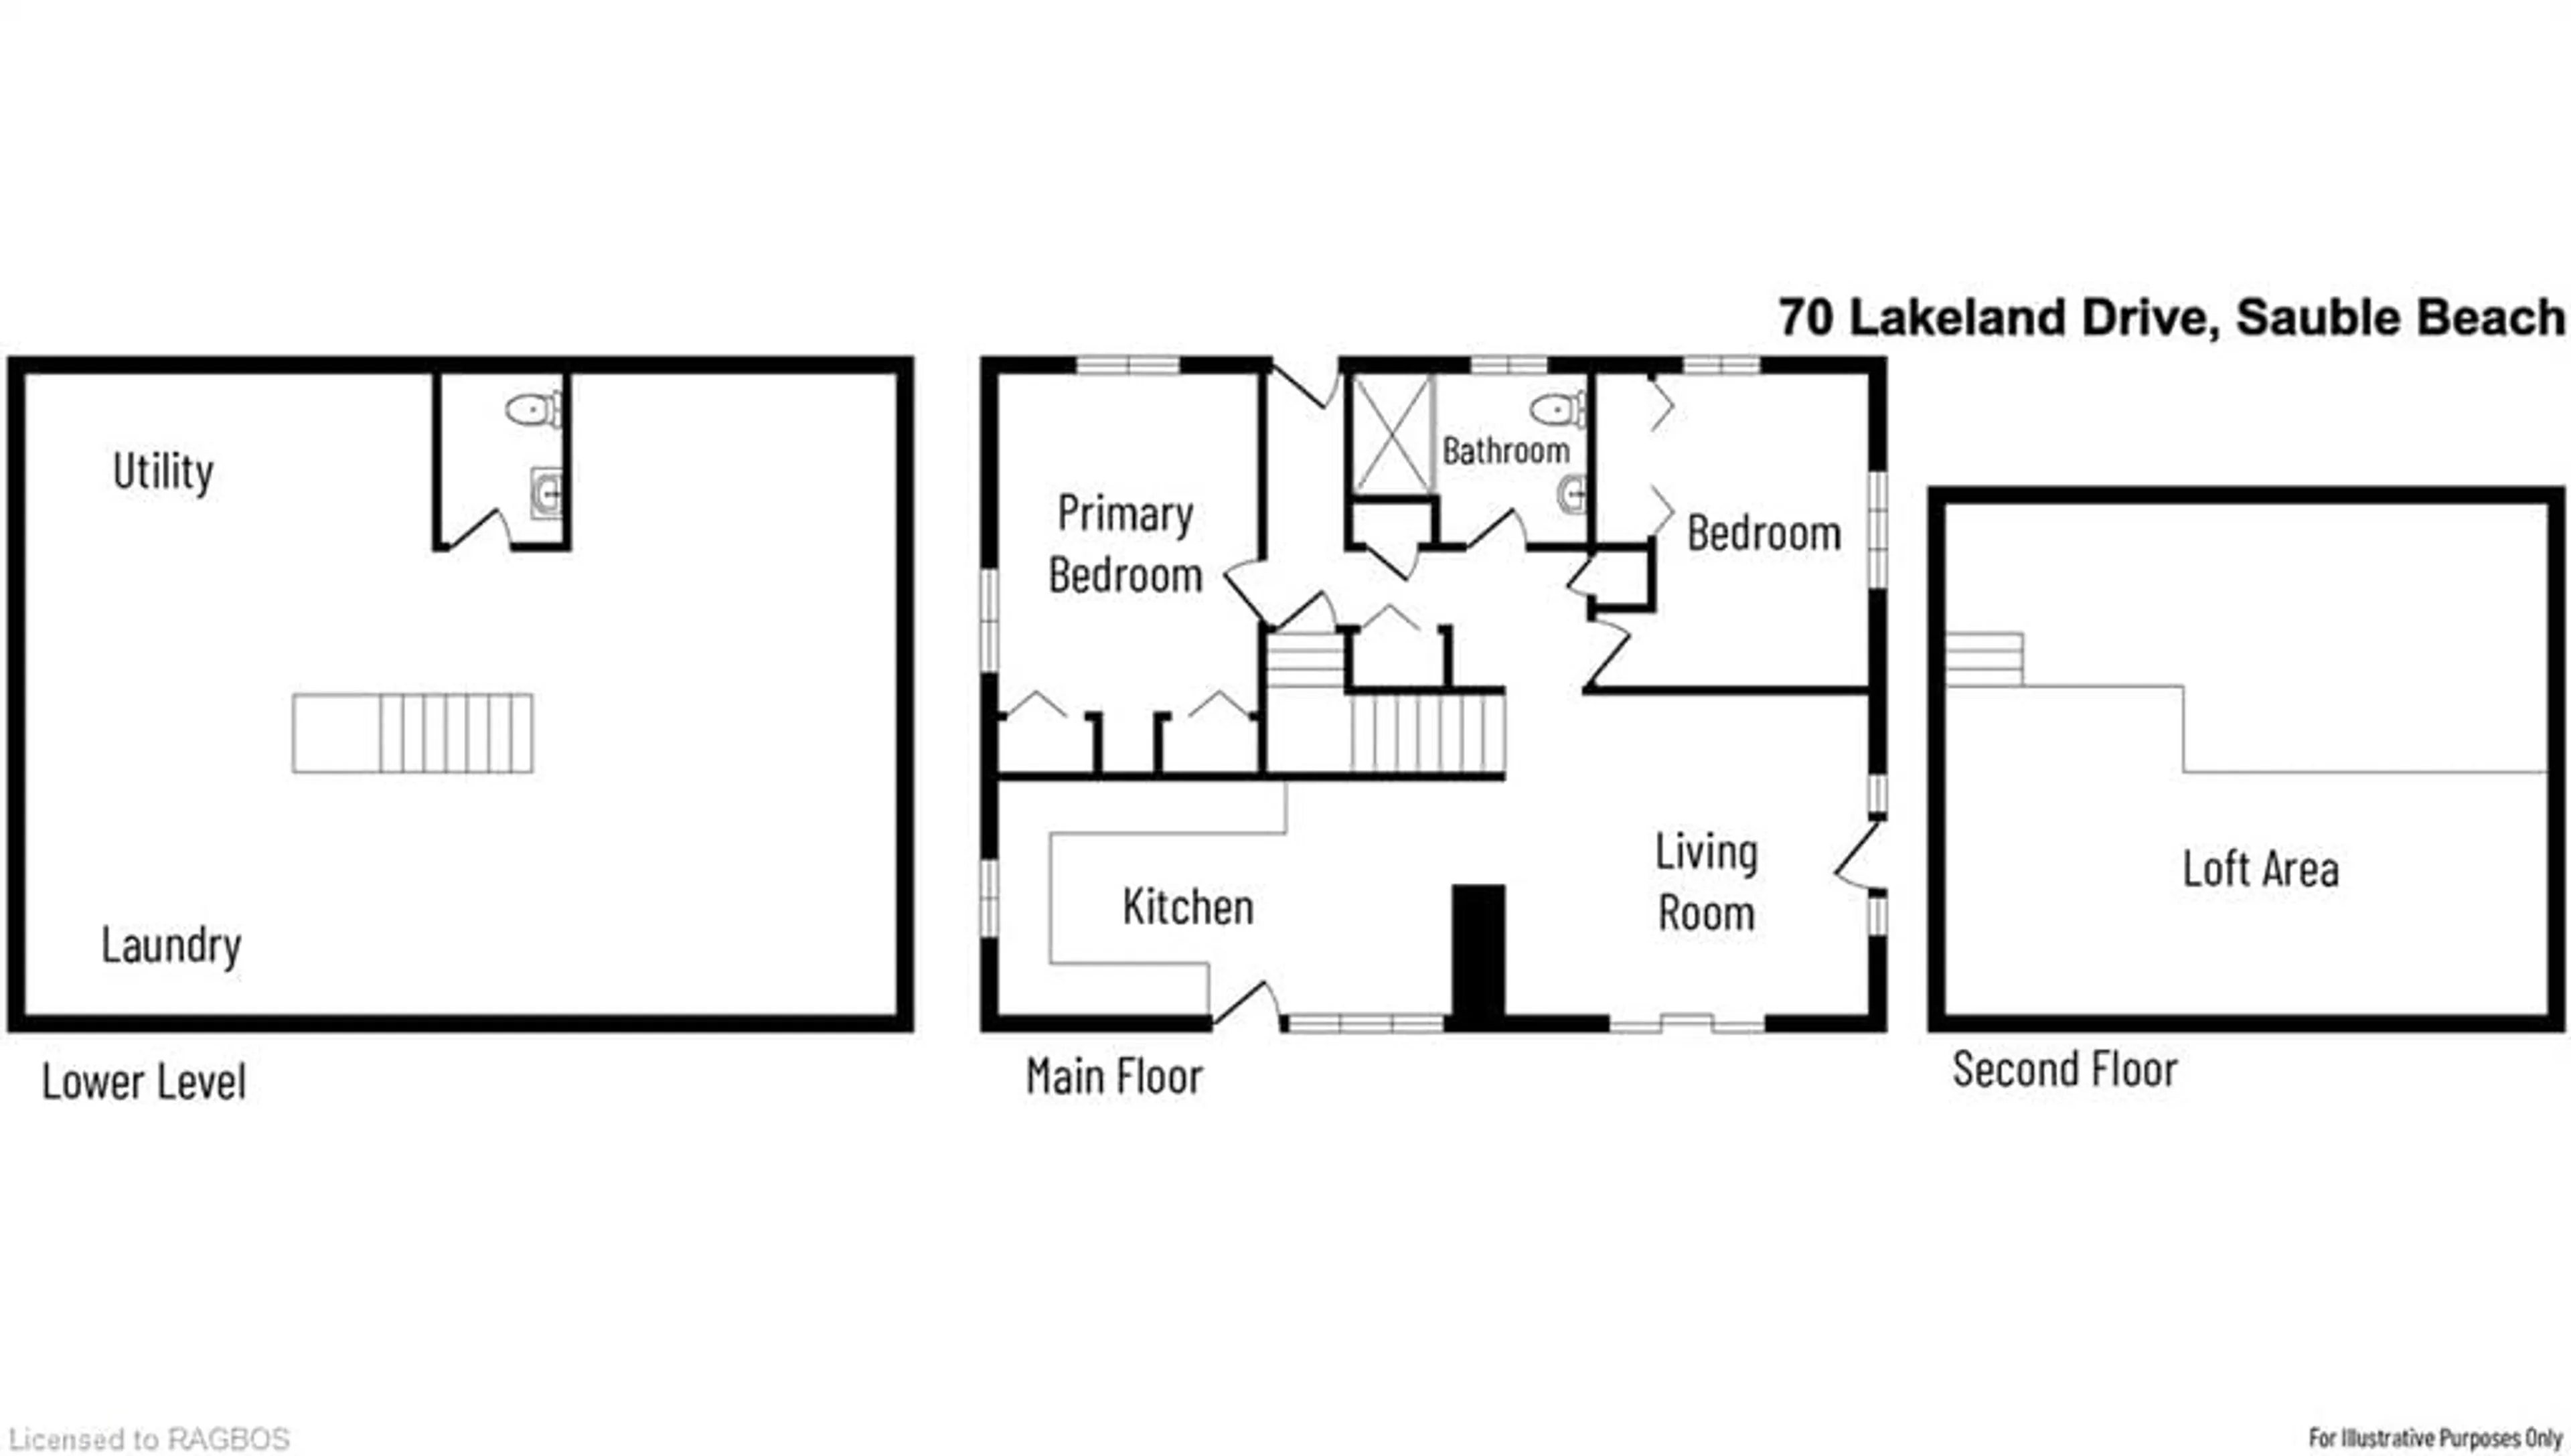 Floor plan for 70 Lakeland Dr, Sauble Beach Ontario N0H 2G0